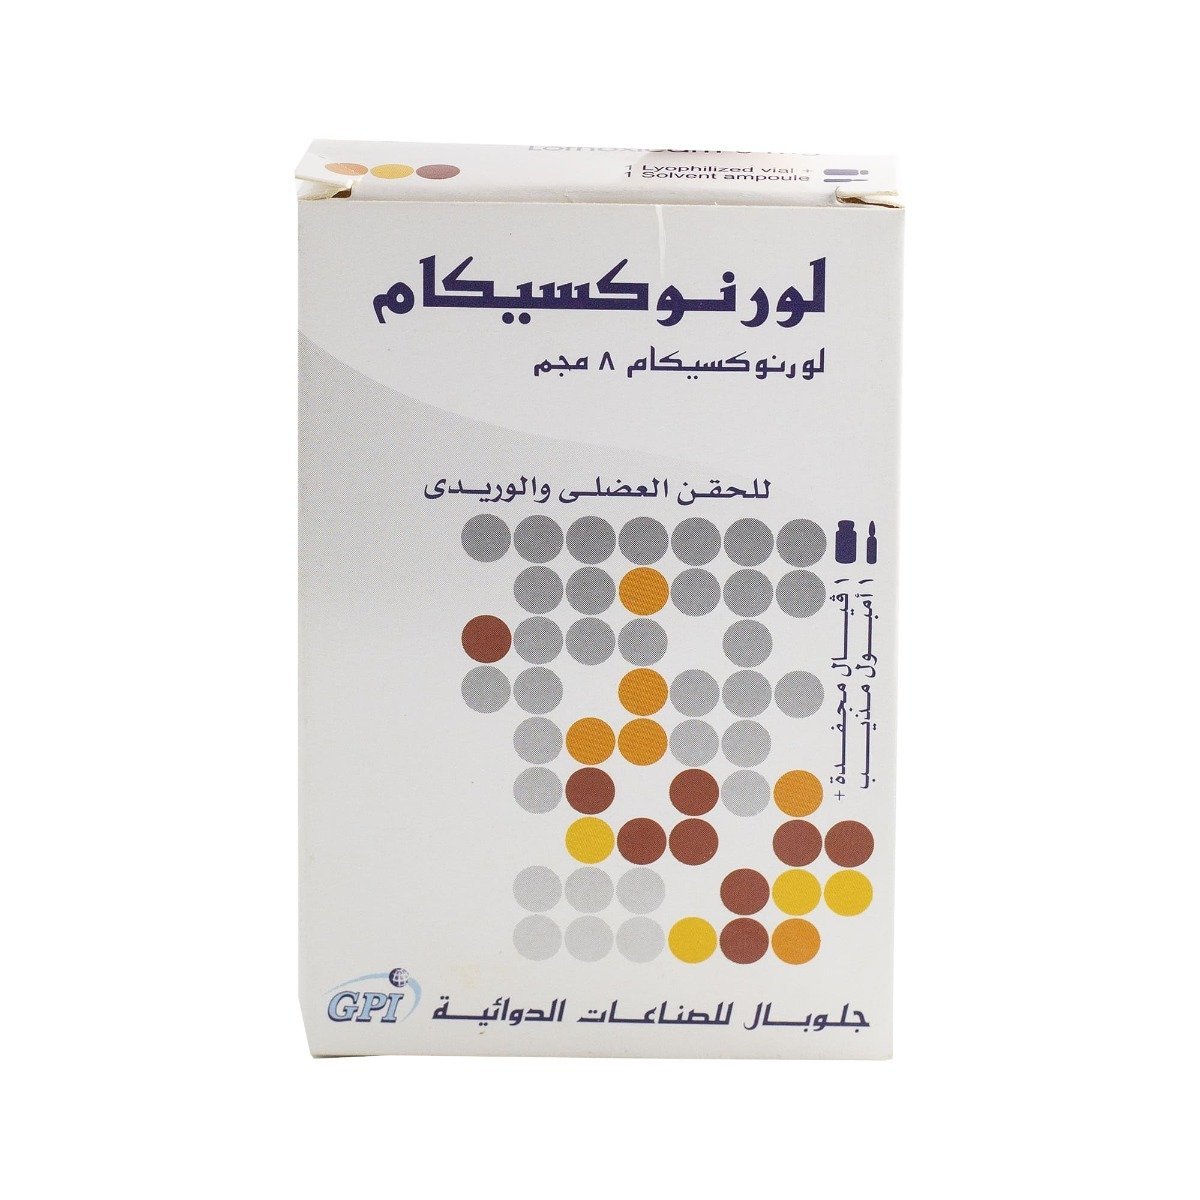 Lornoxicam 8 mg-2 ml - 1 Vial - Bloom Pharmacy